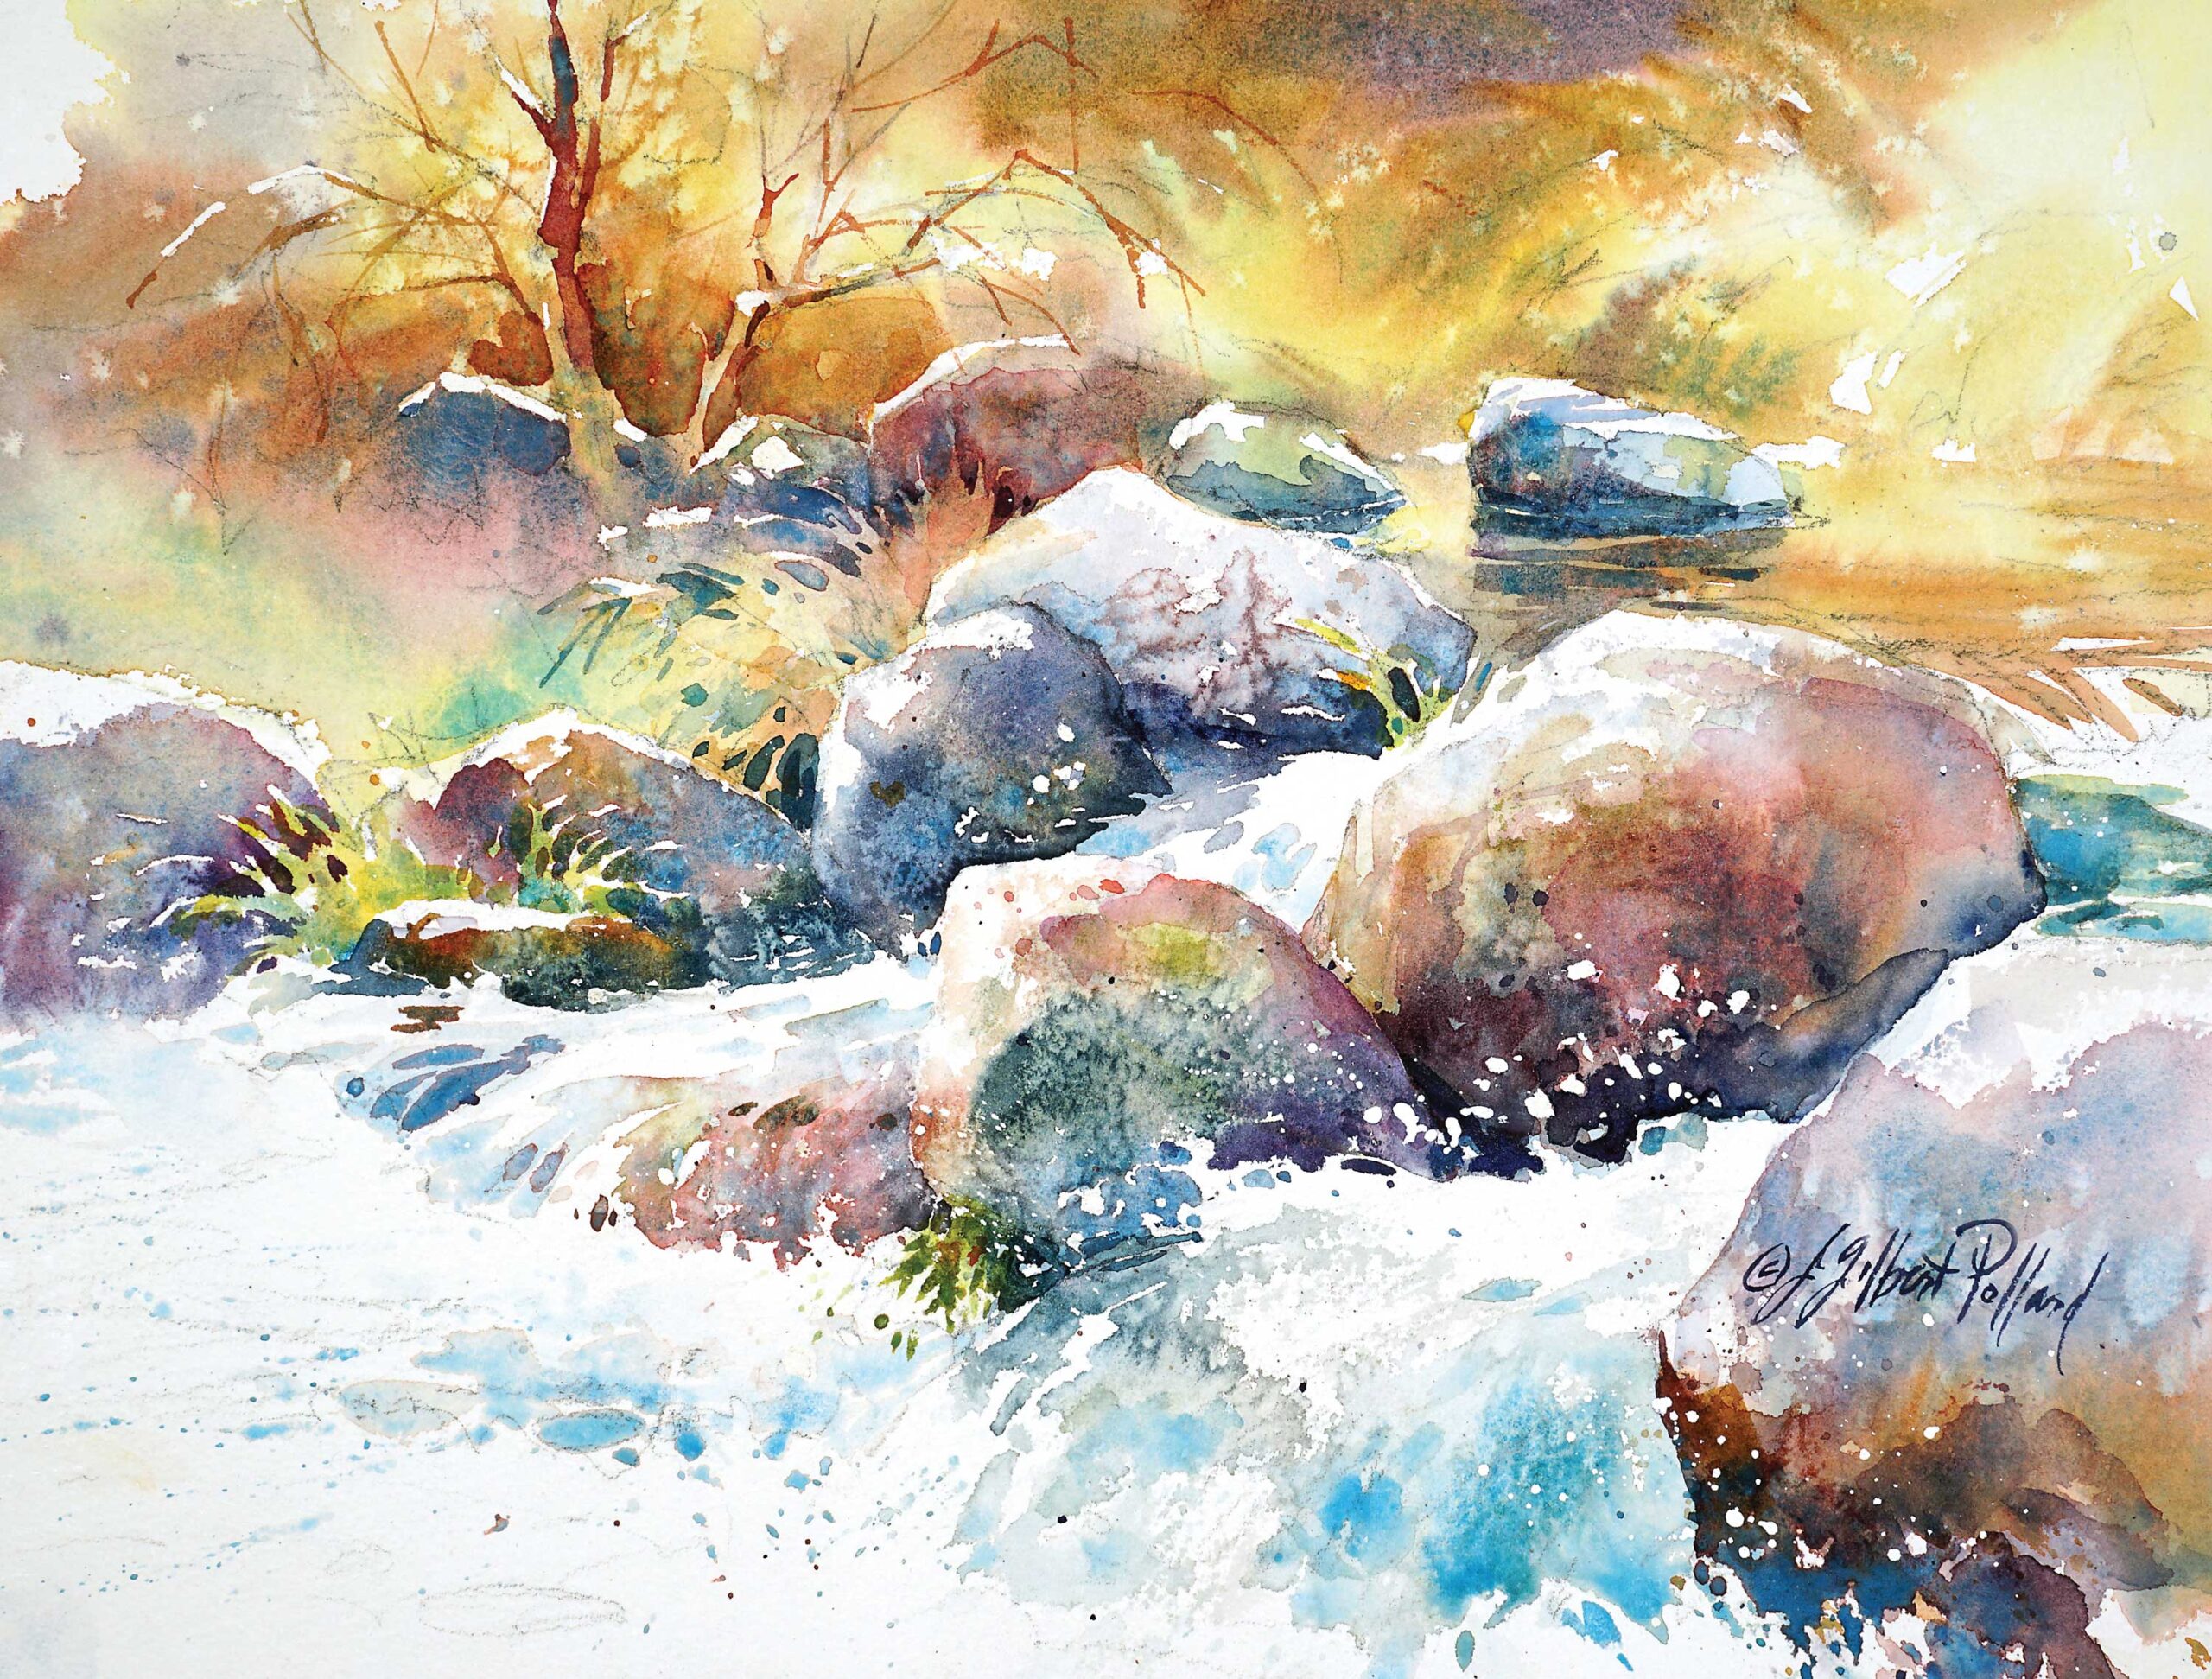 Julie Gilbert Pollard, "Oak Creek at Briar Patch XVII," 2019, watercolor, 10 x 14 in., Available from artist, Studio.